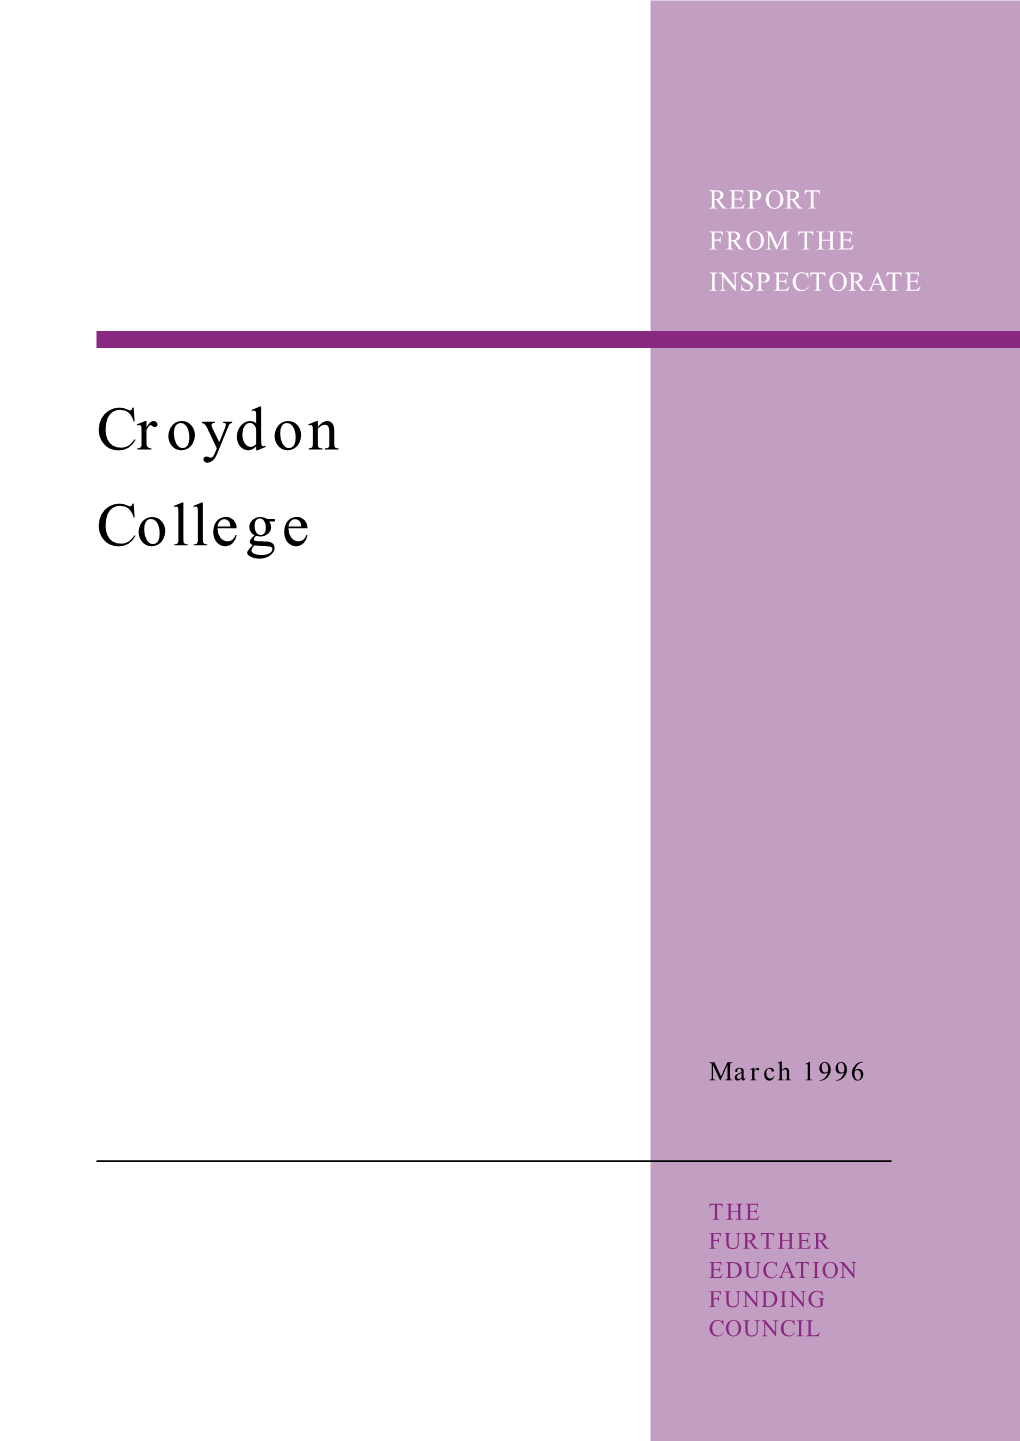 Croydon College